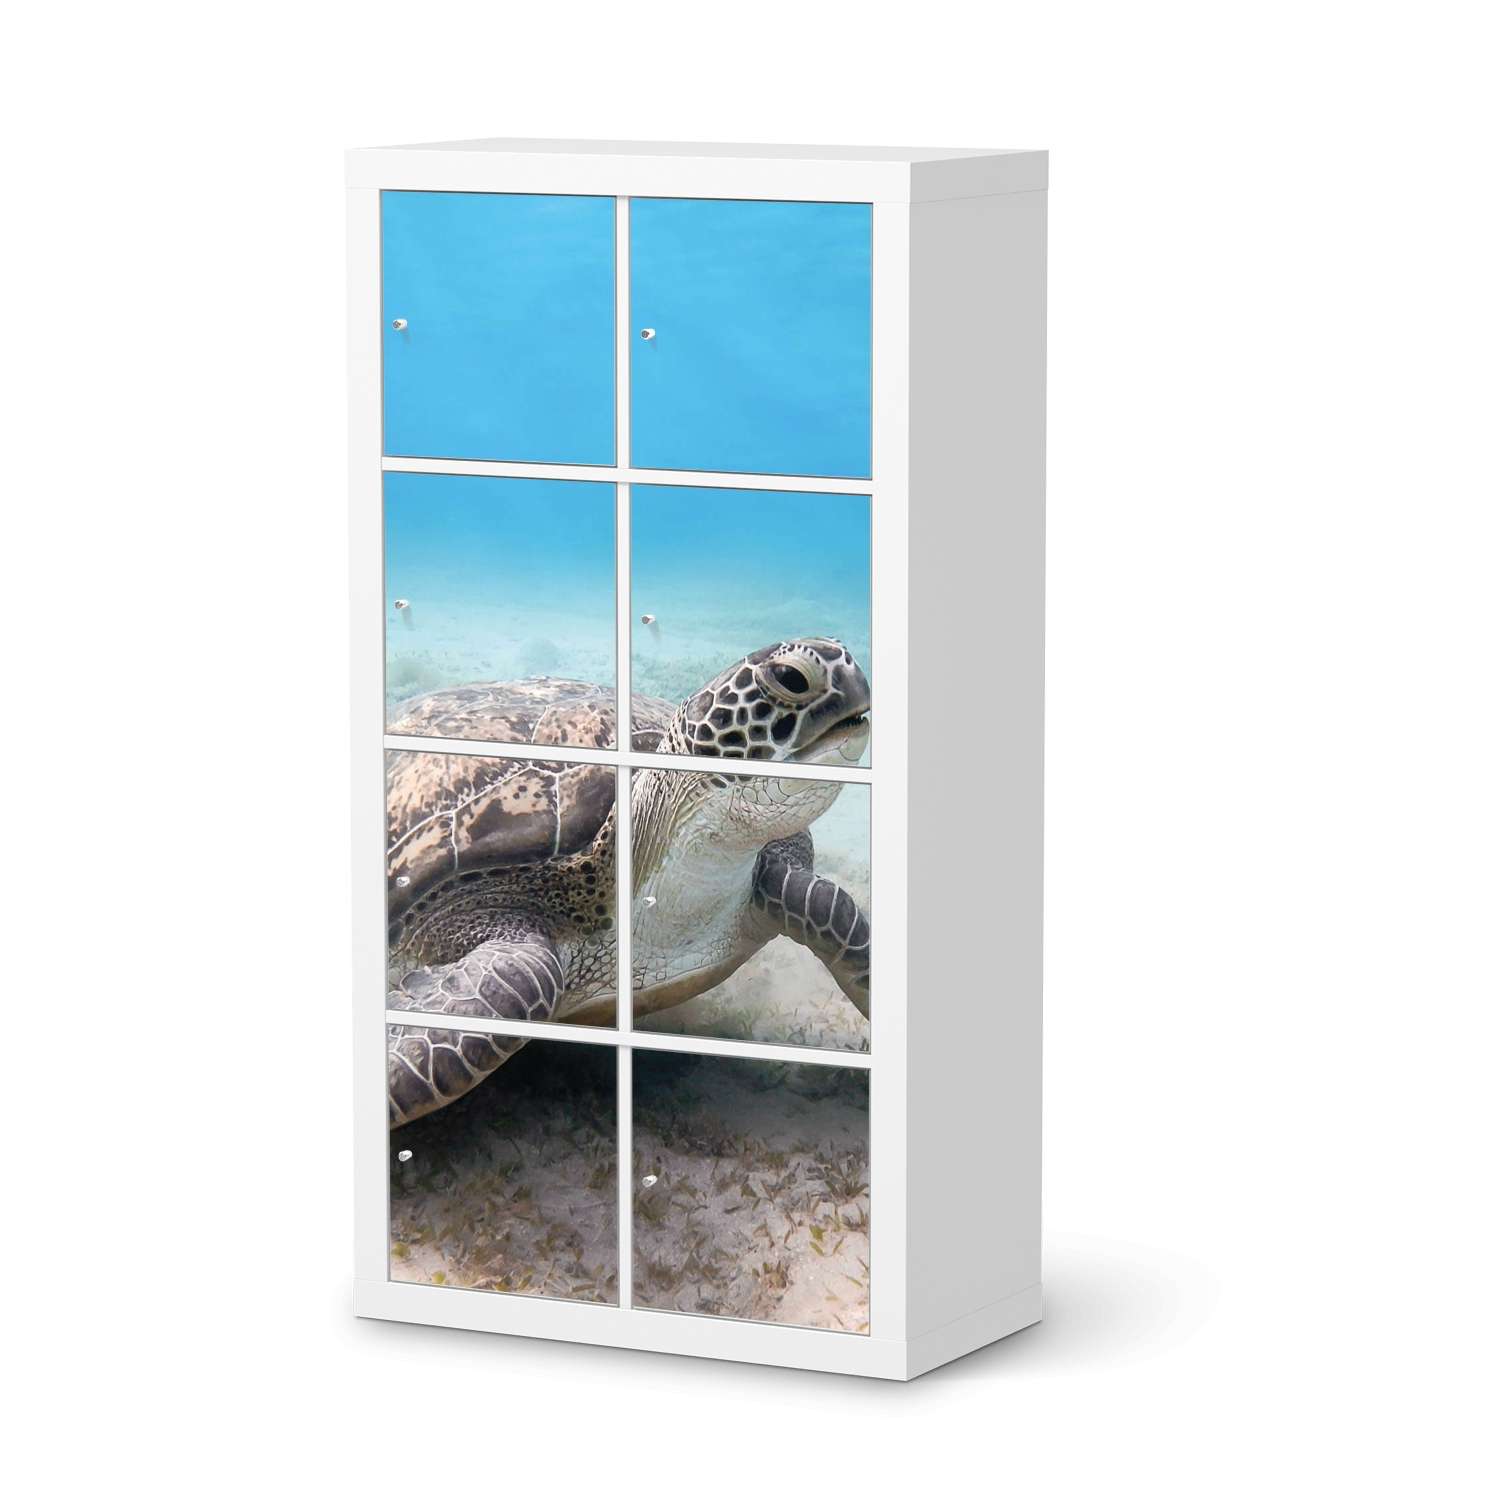 Folie für Möbel IKEA Kallax Regal 8 Türen - Design: Green Sea Turtle